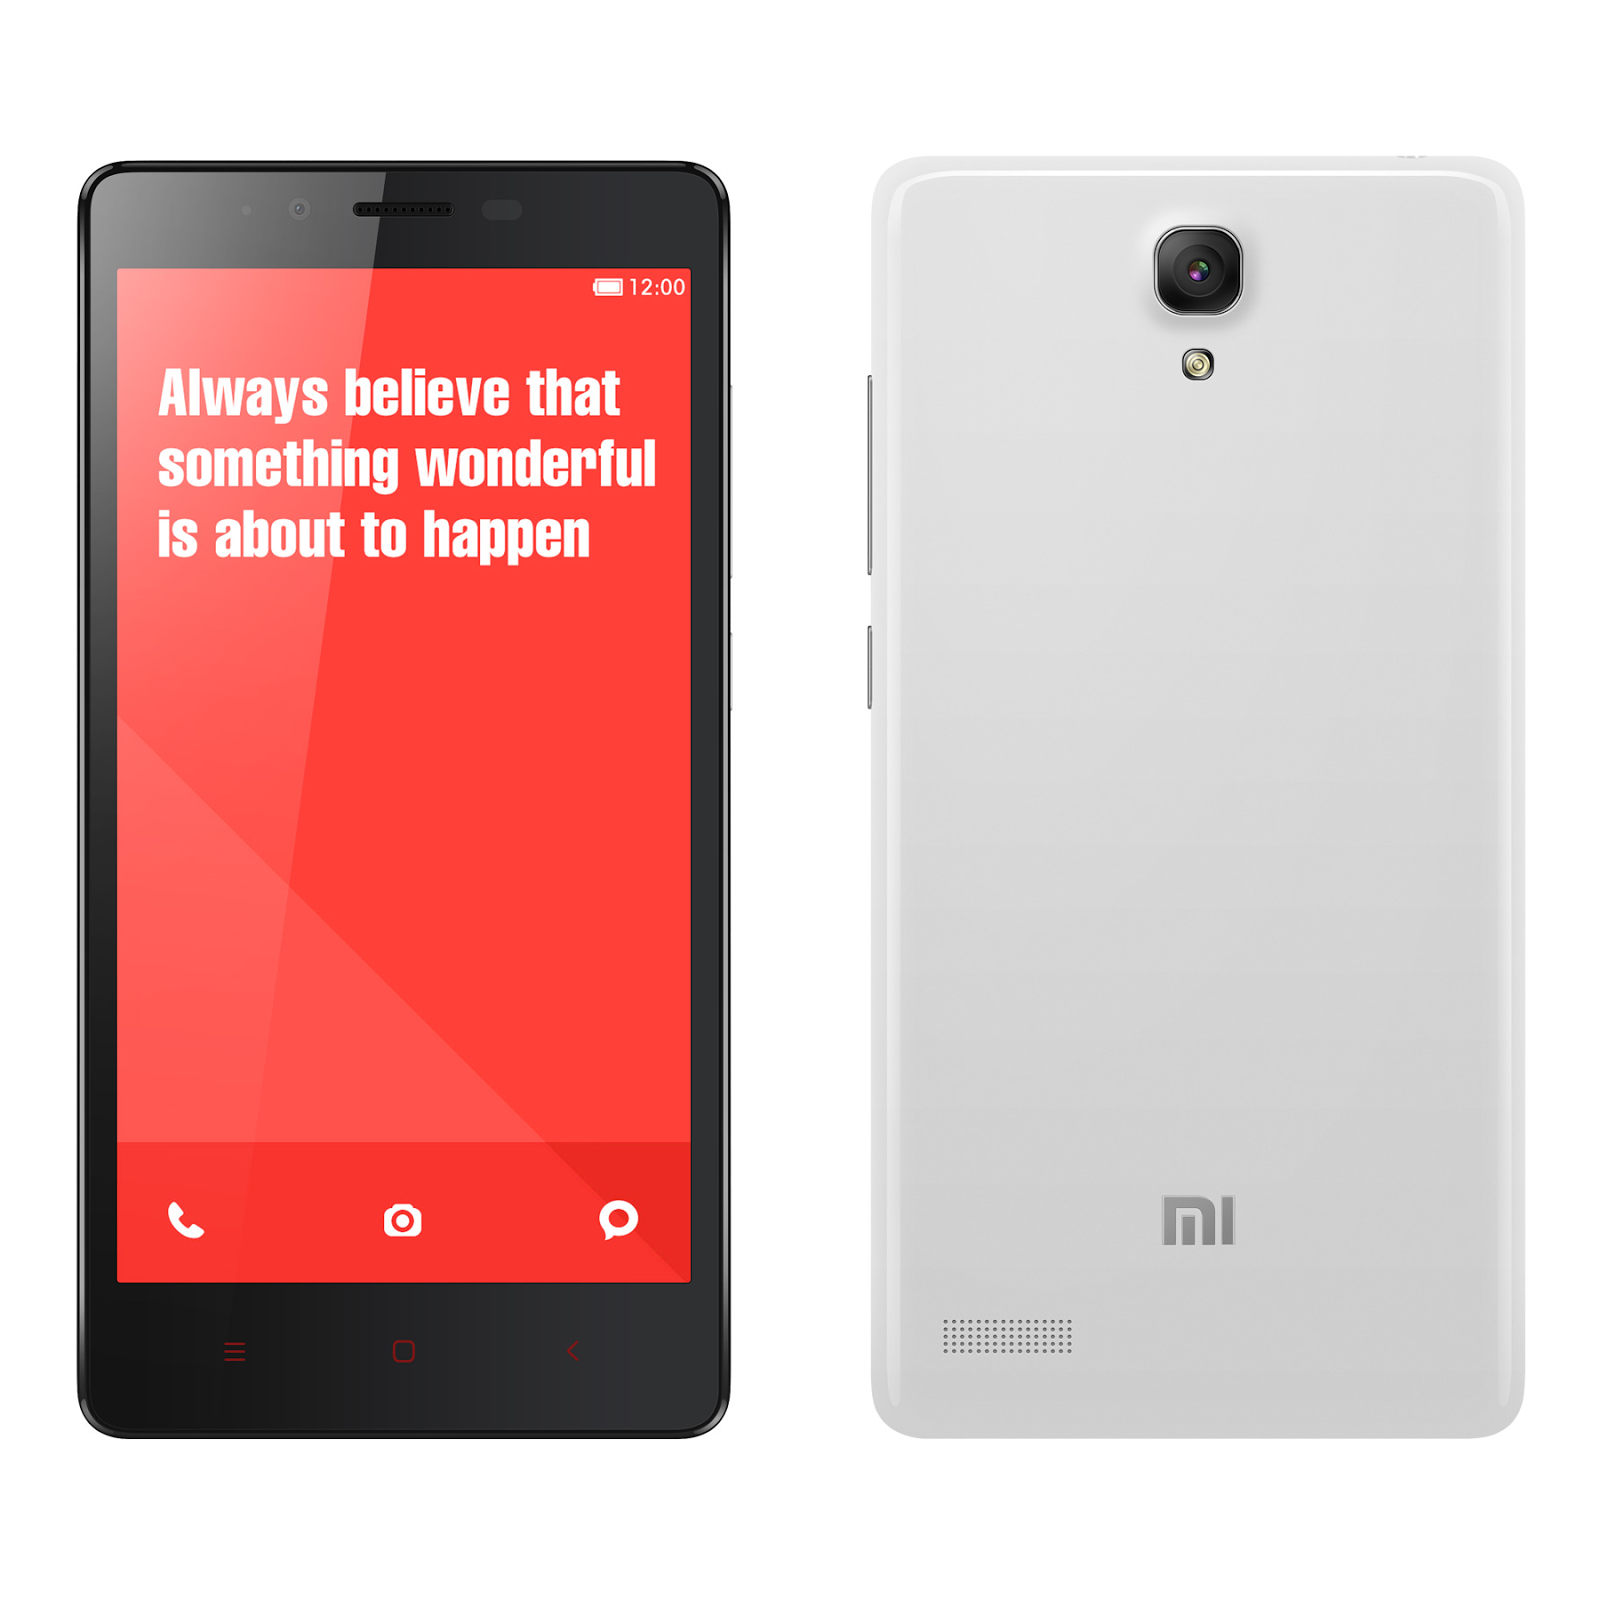 Xiaomi Redmi Note 4G de venta en India el 30 de diciembre